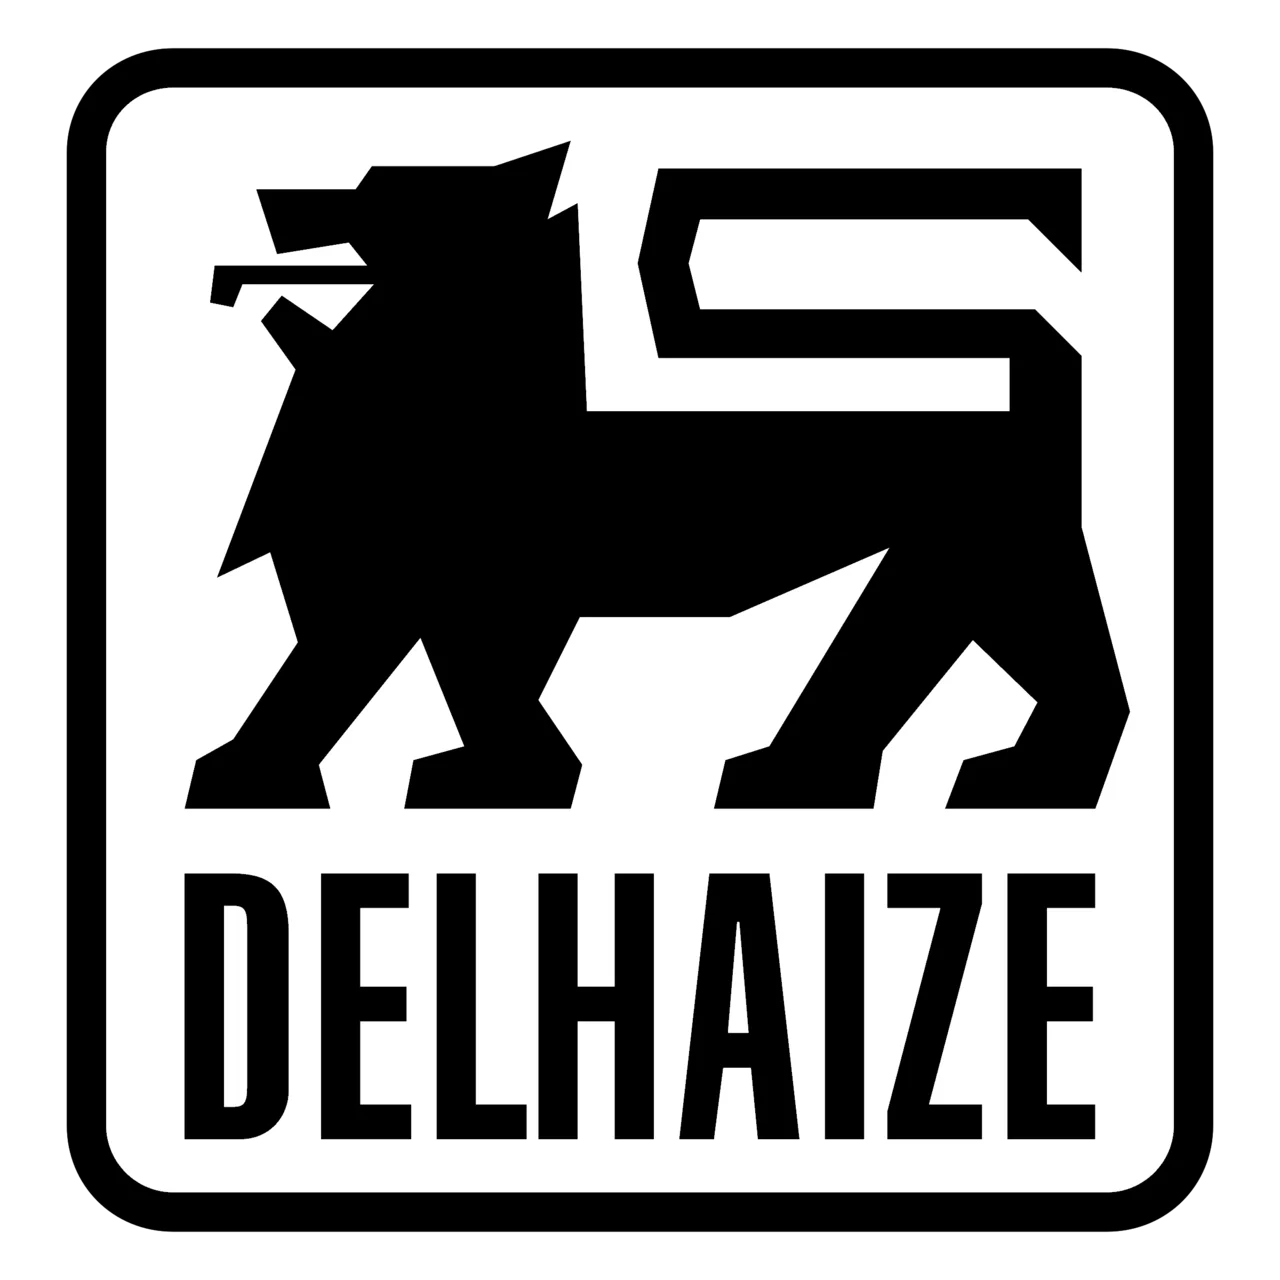 delhaize-logo-black-and-white